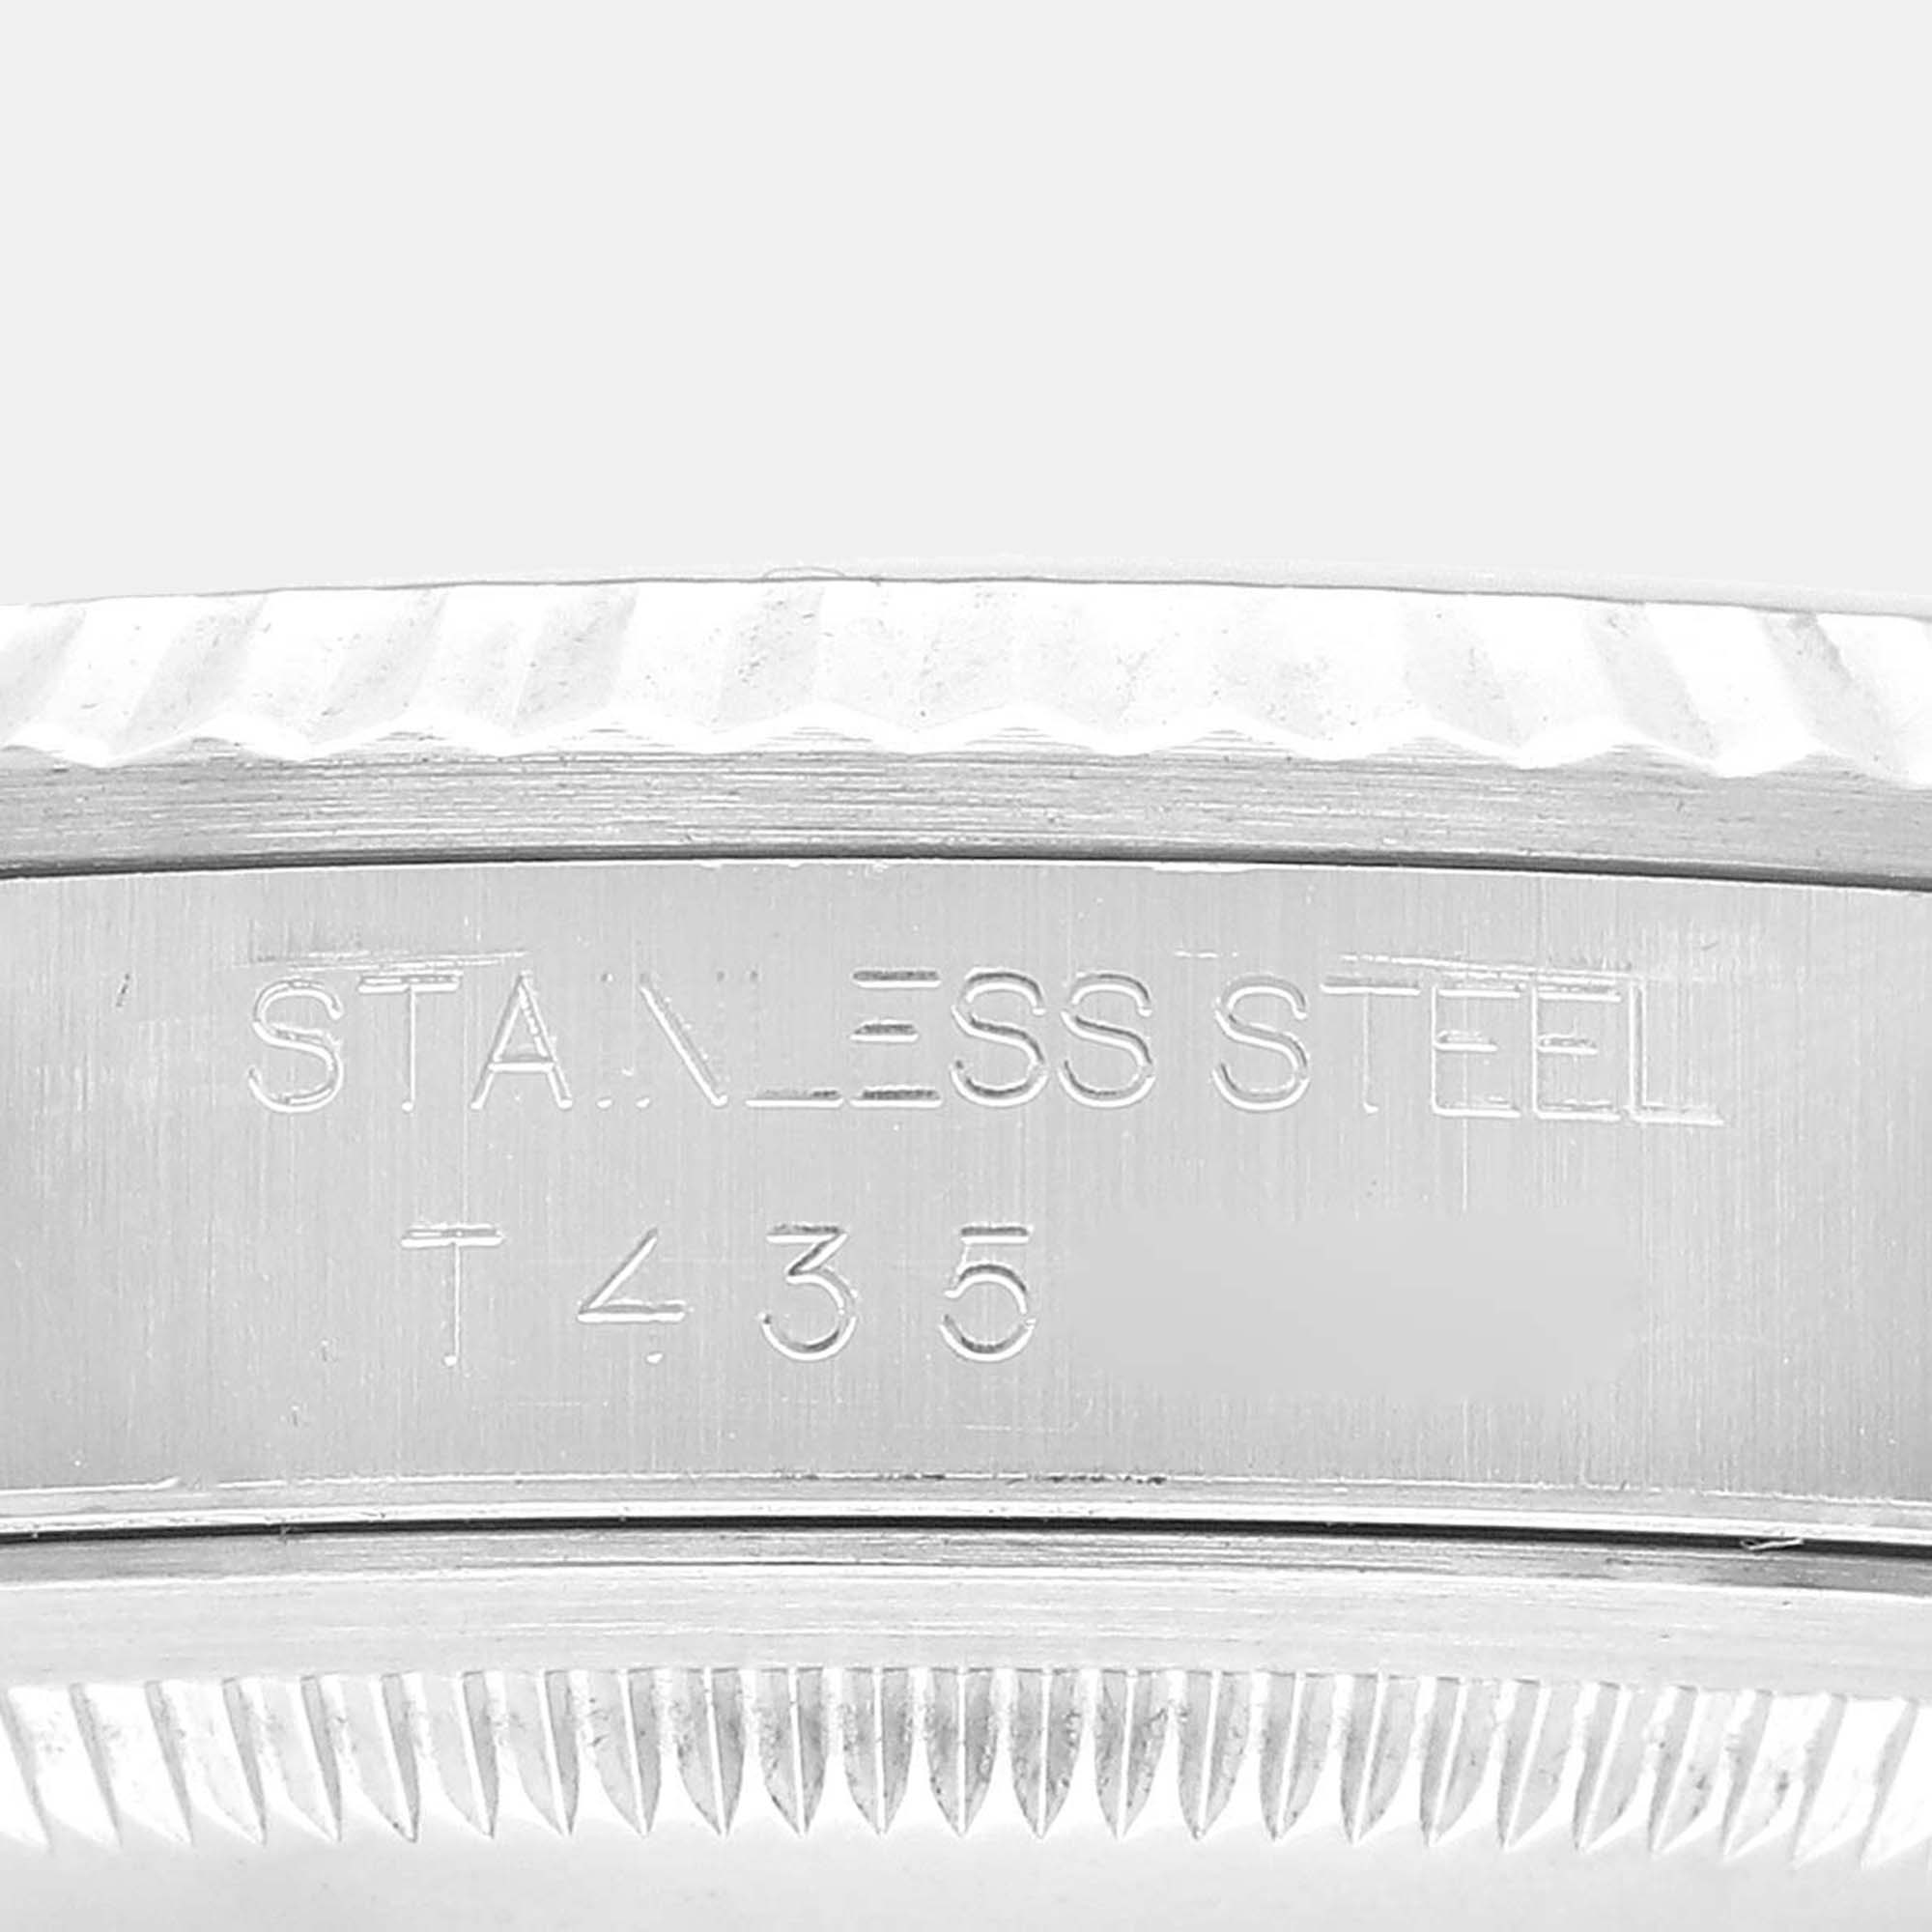 Rolex Datejust 36 Steel White Gold Salmon Roman Dial Mens Watch 16234